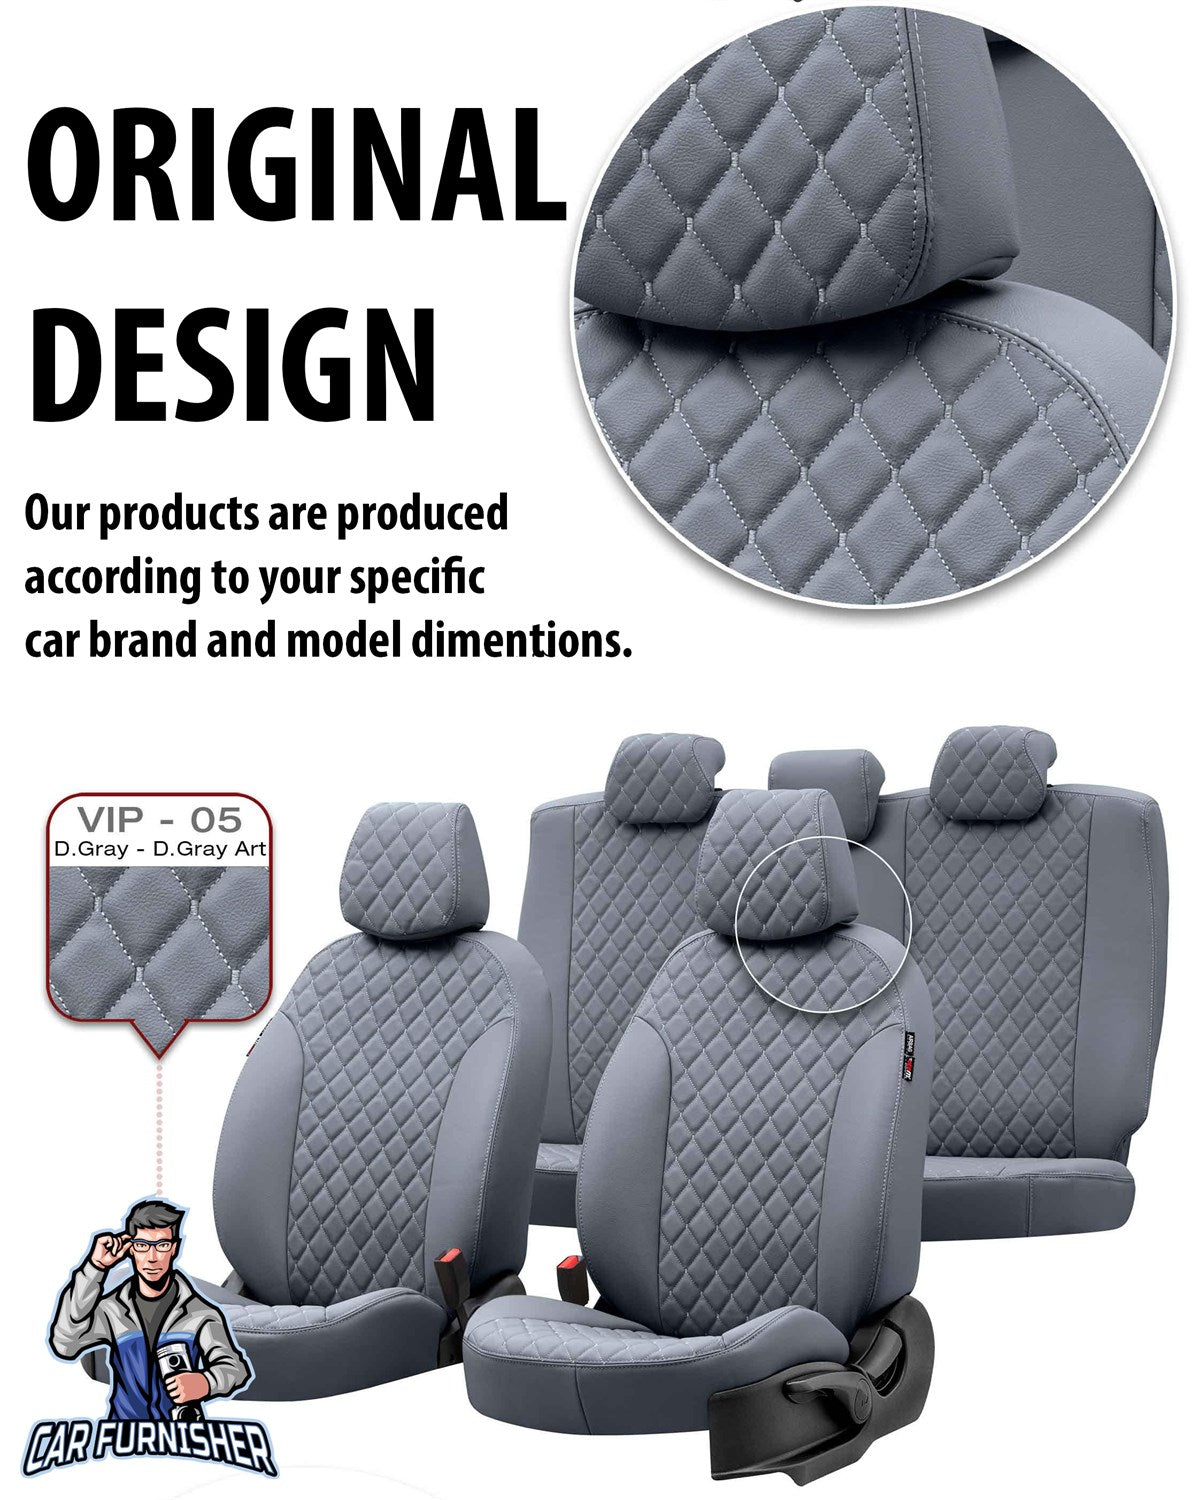 Volkswagen Amarok Seat Cover Madrid Leather Design Beige Leather